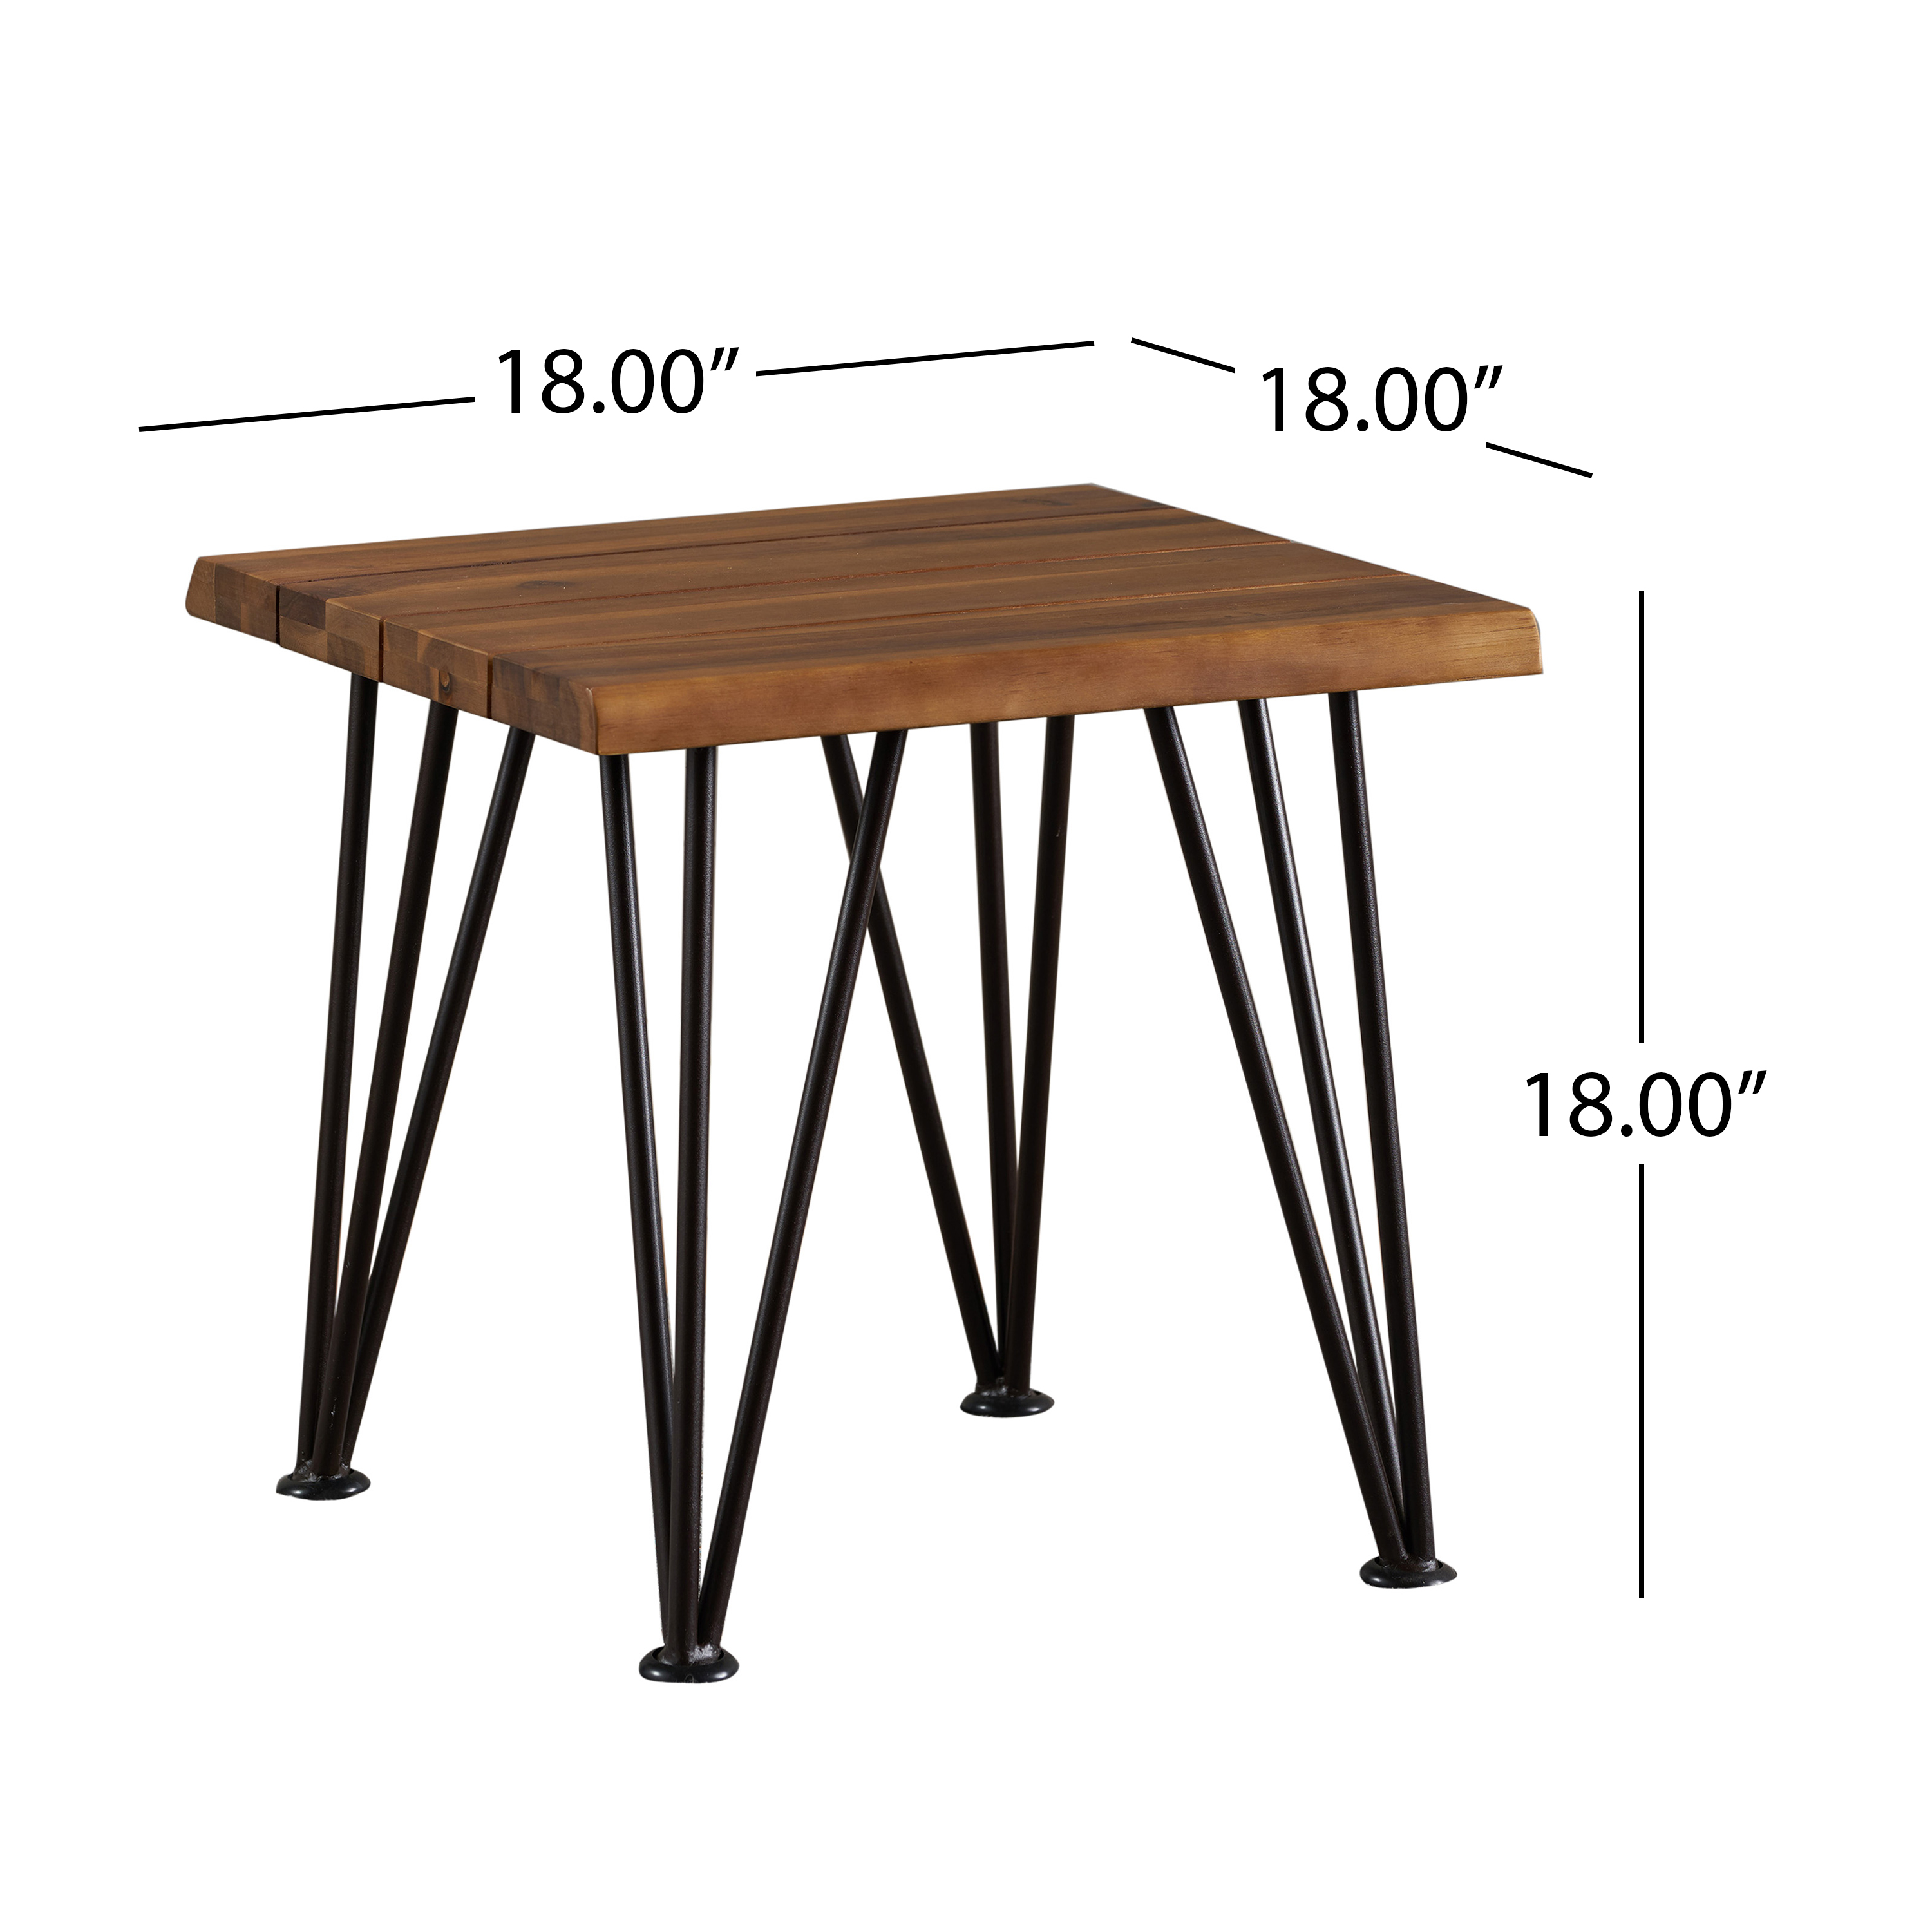 GDF Studio Avy Indoor/Outdoor Modern Industrial Acacia Wood Side Table, Teak and Rustic Metal - image 4 of 7